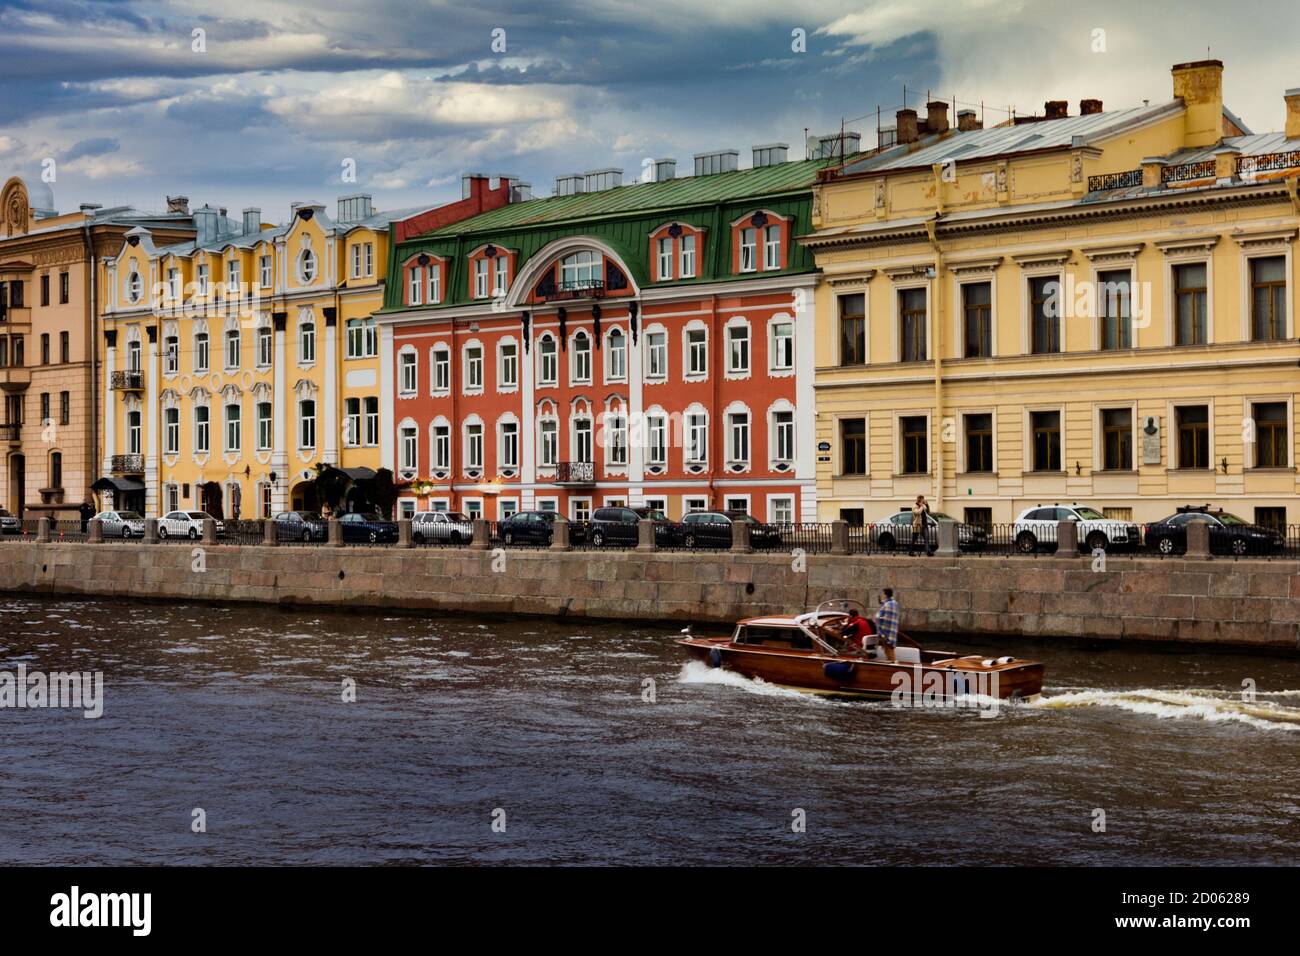 St.Peterburg. Russia. River in Saint Petersburg Russia. Saint Petersburg with its buildings. Stock Photo